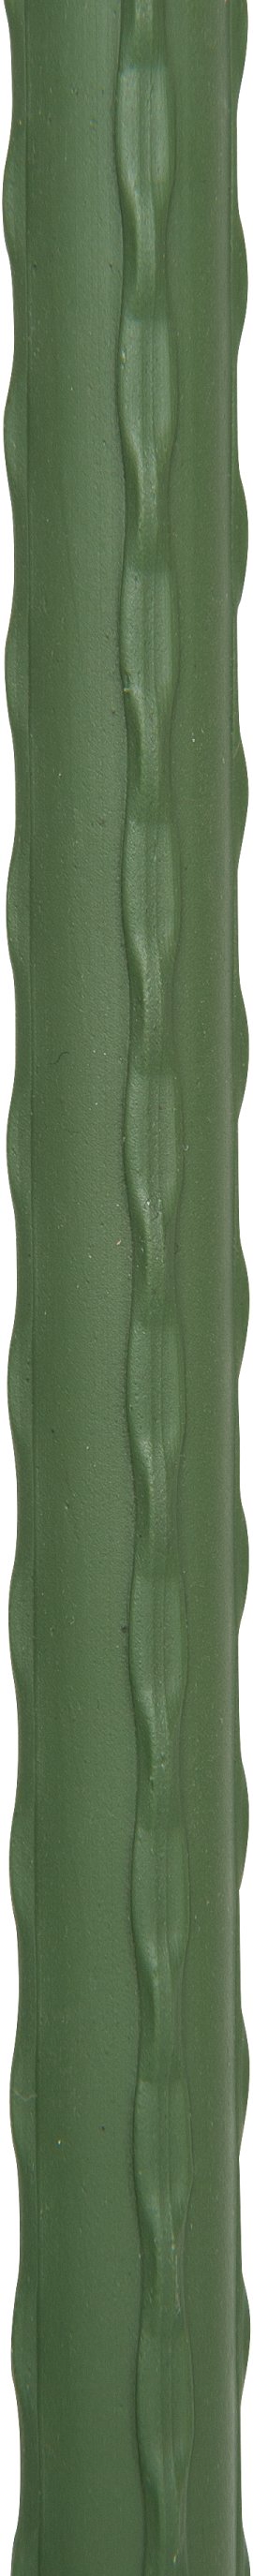 WINDHAGER Pflanzstab 11 mm, grün